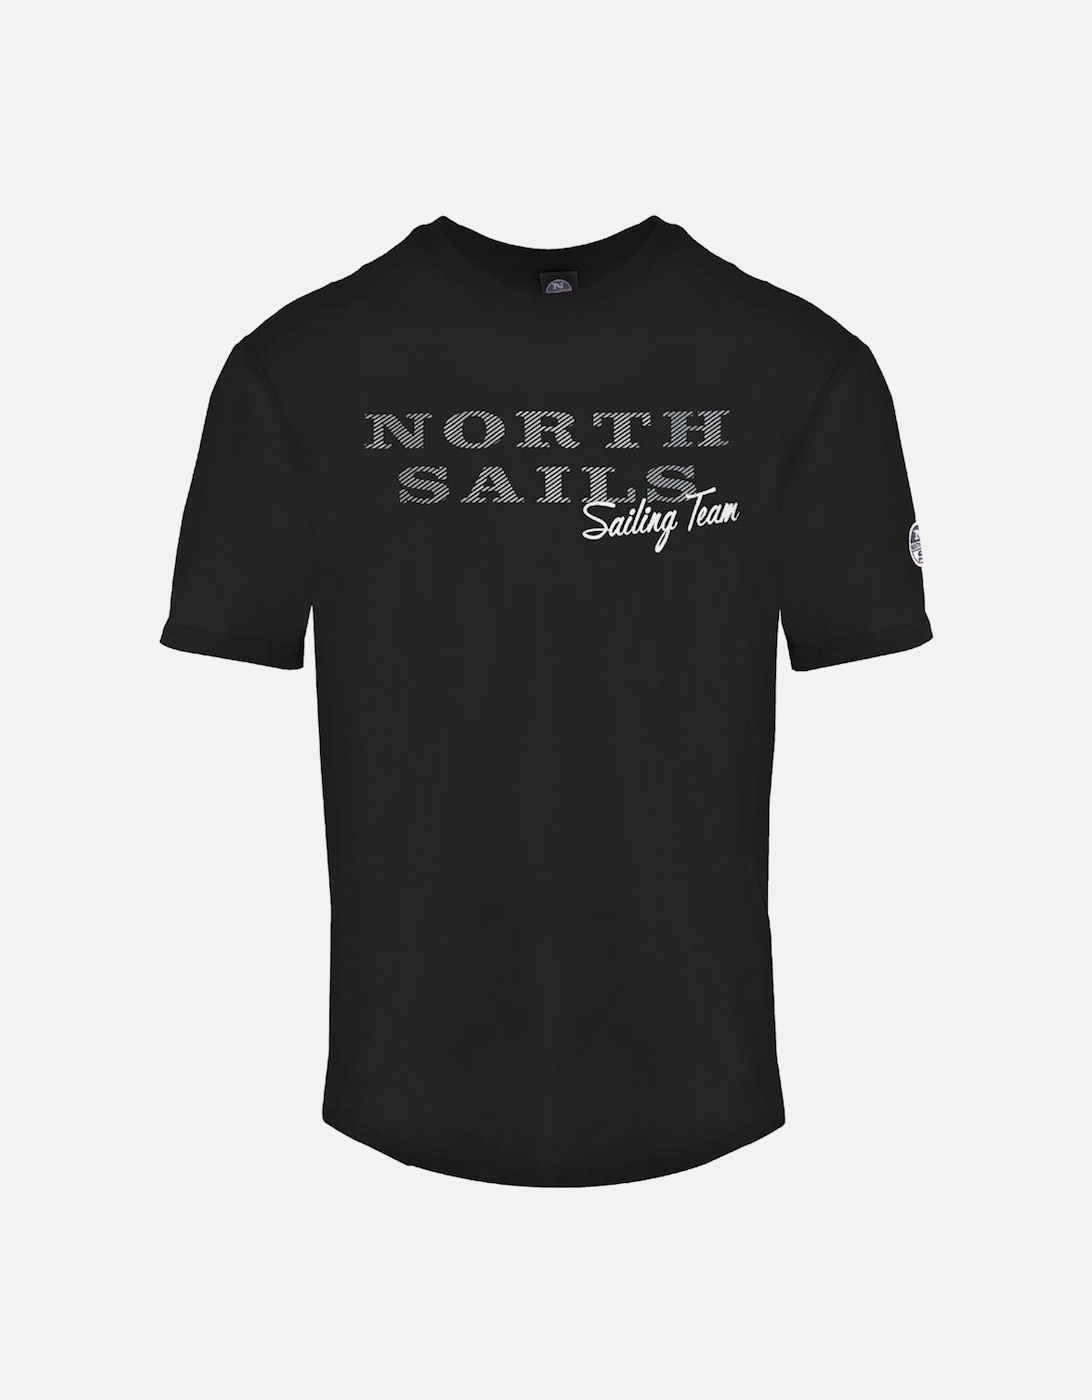 Sailing Team Black T-Shirt, 3 of 2